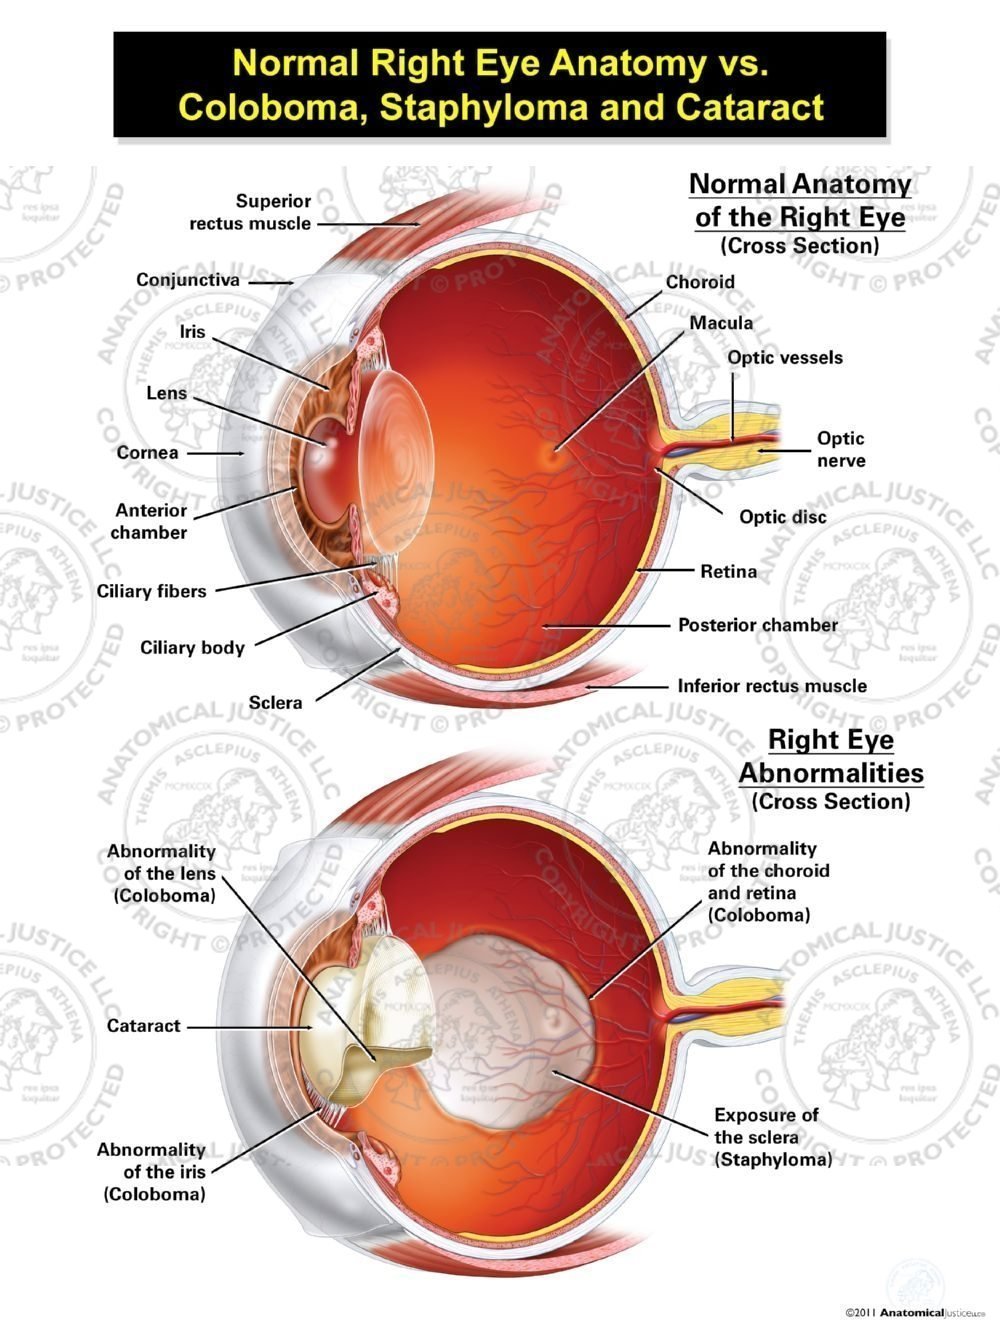 Normal Right Eye Anatomy vs. Coloboma, Staphyloma, and Cataract